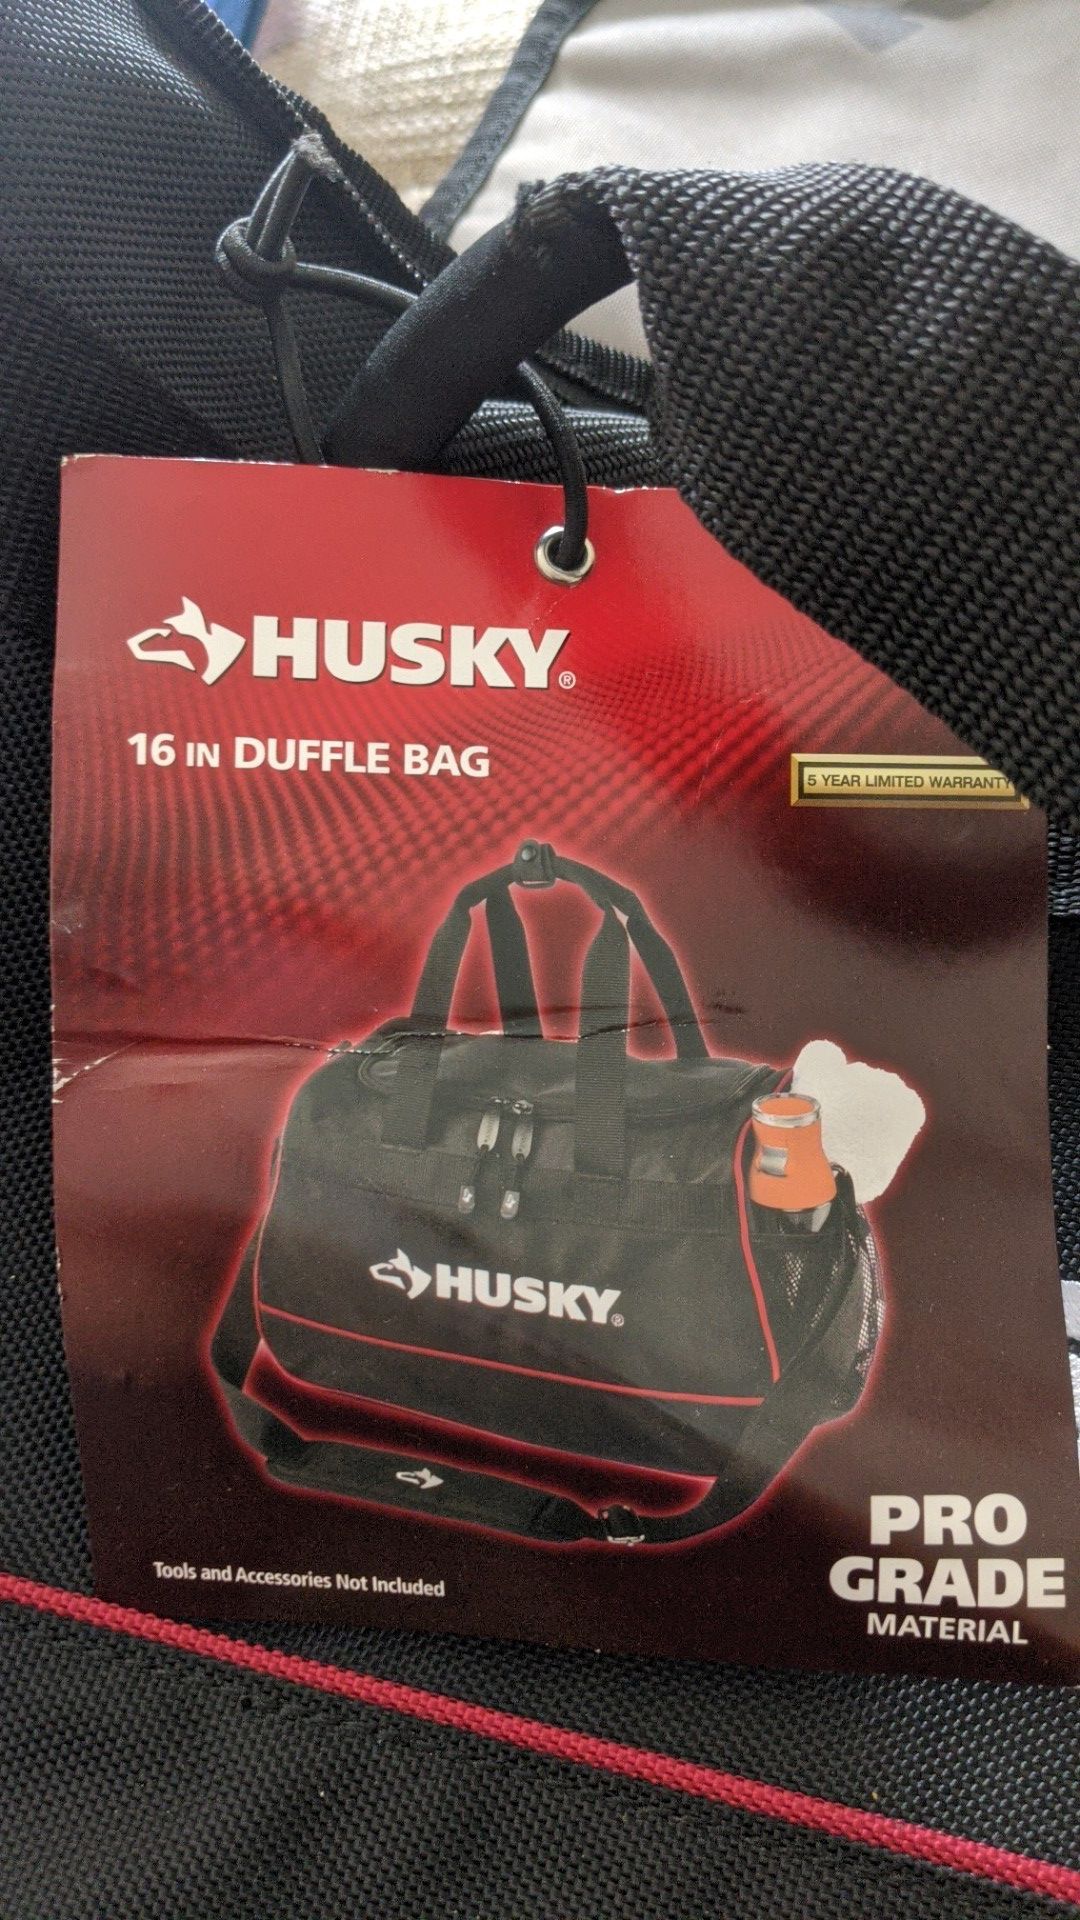 Husky 16 in duffle bag